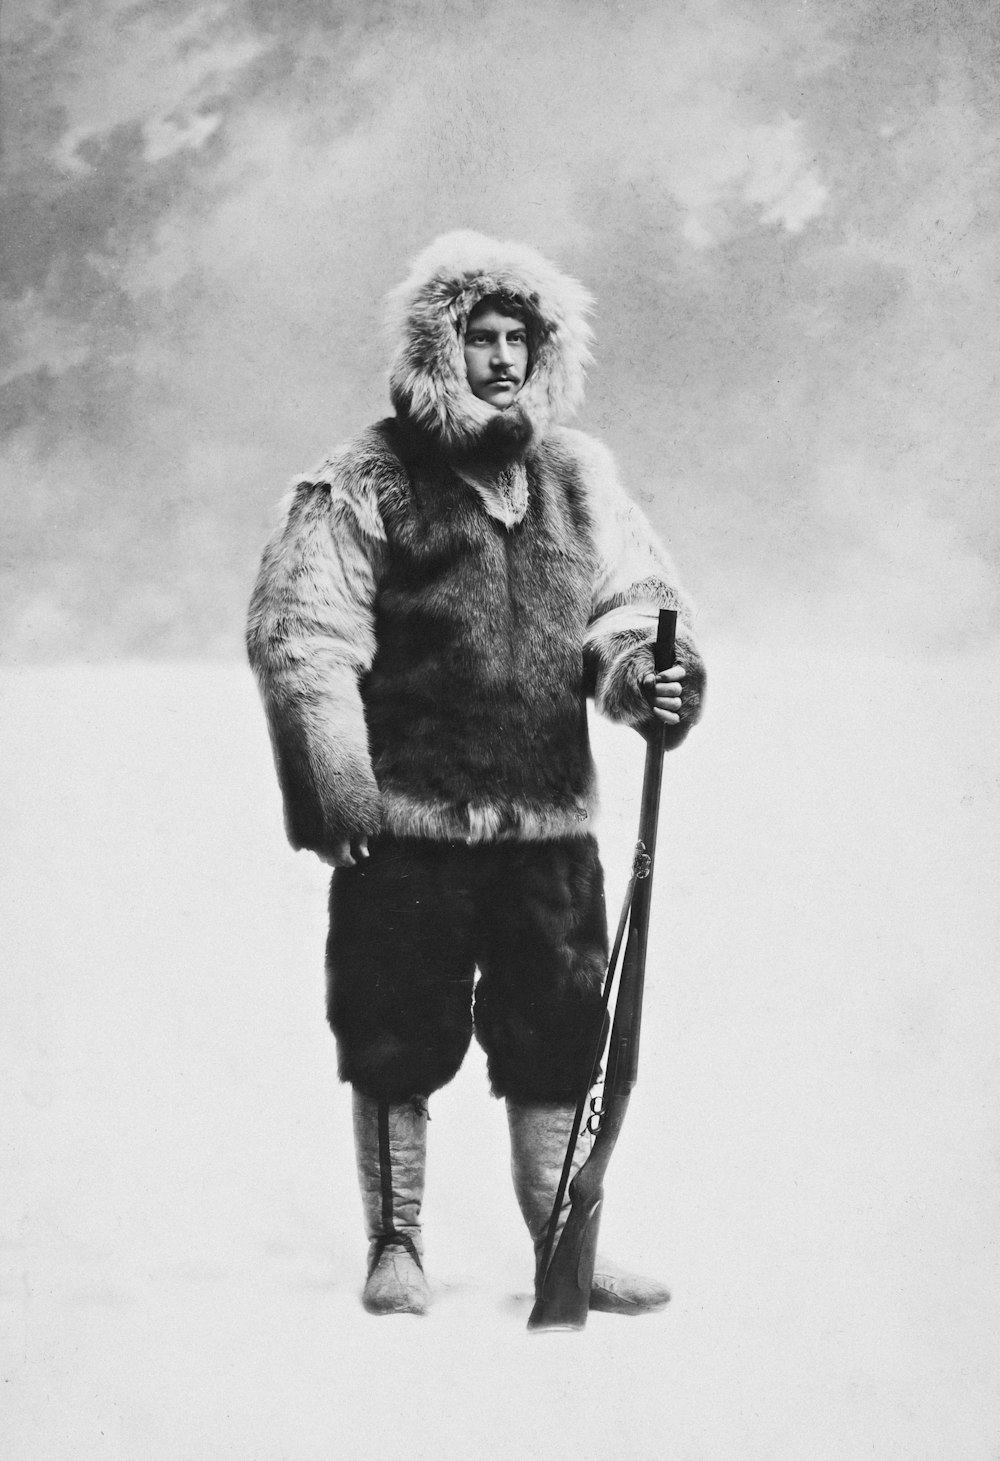 a man in a fur coat holding a ski pole